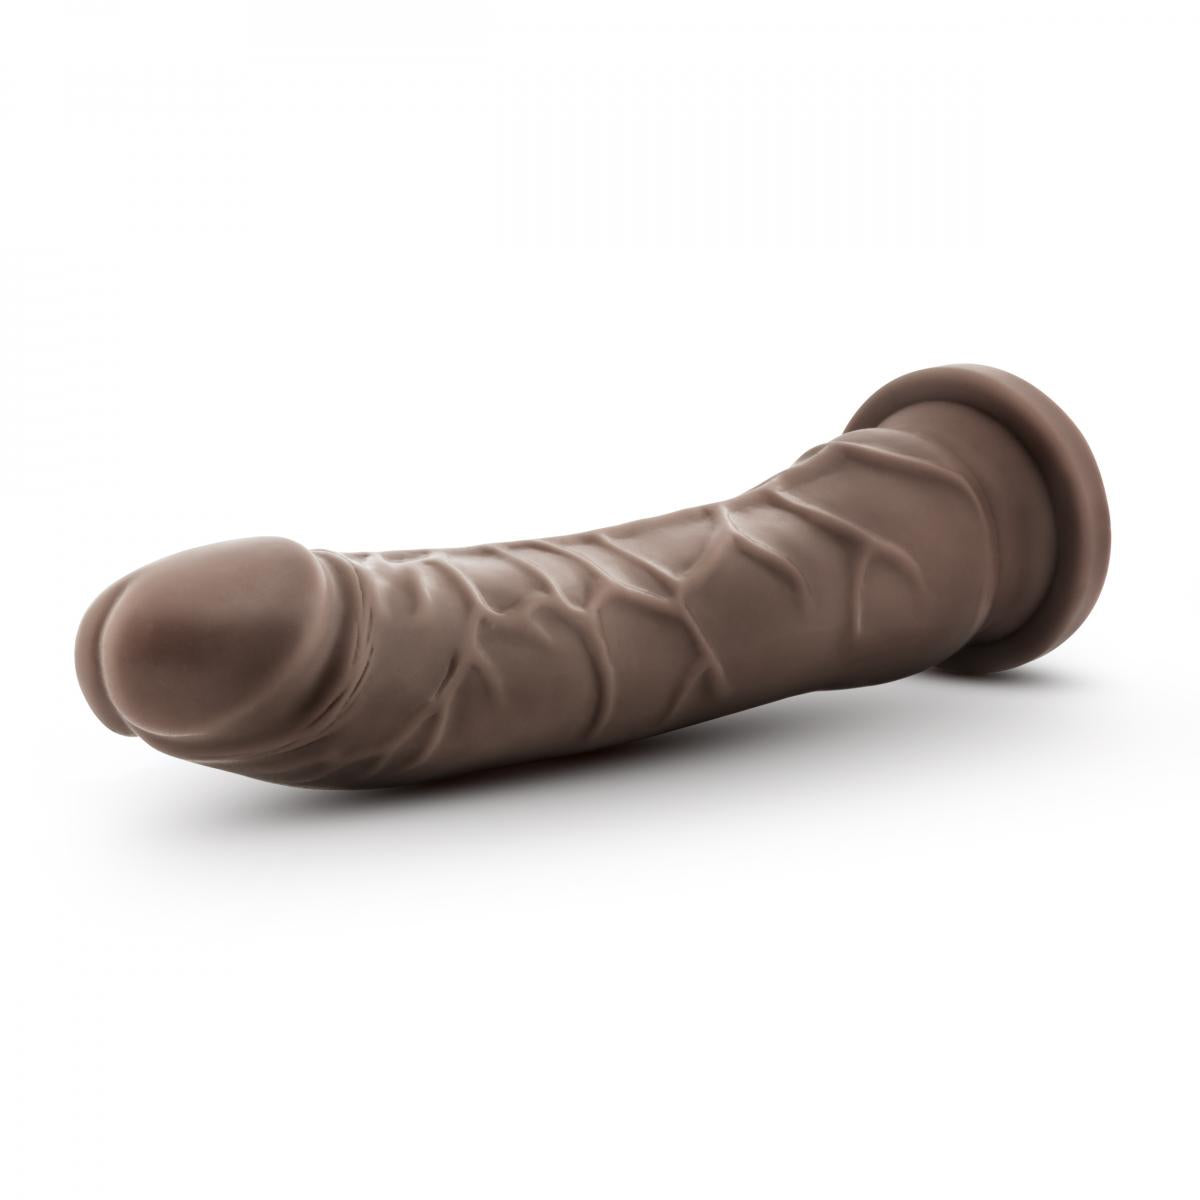 Dr. Skin - Realistische Dildo Met Zuignap 21 cm - Chocolate